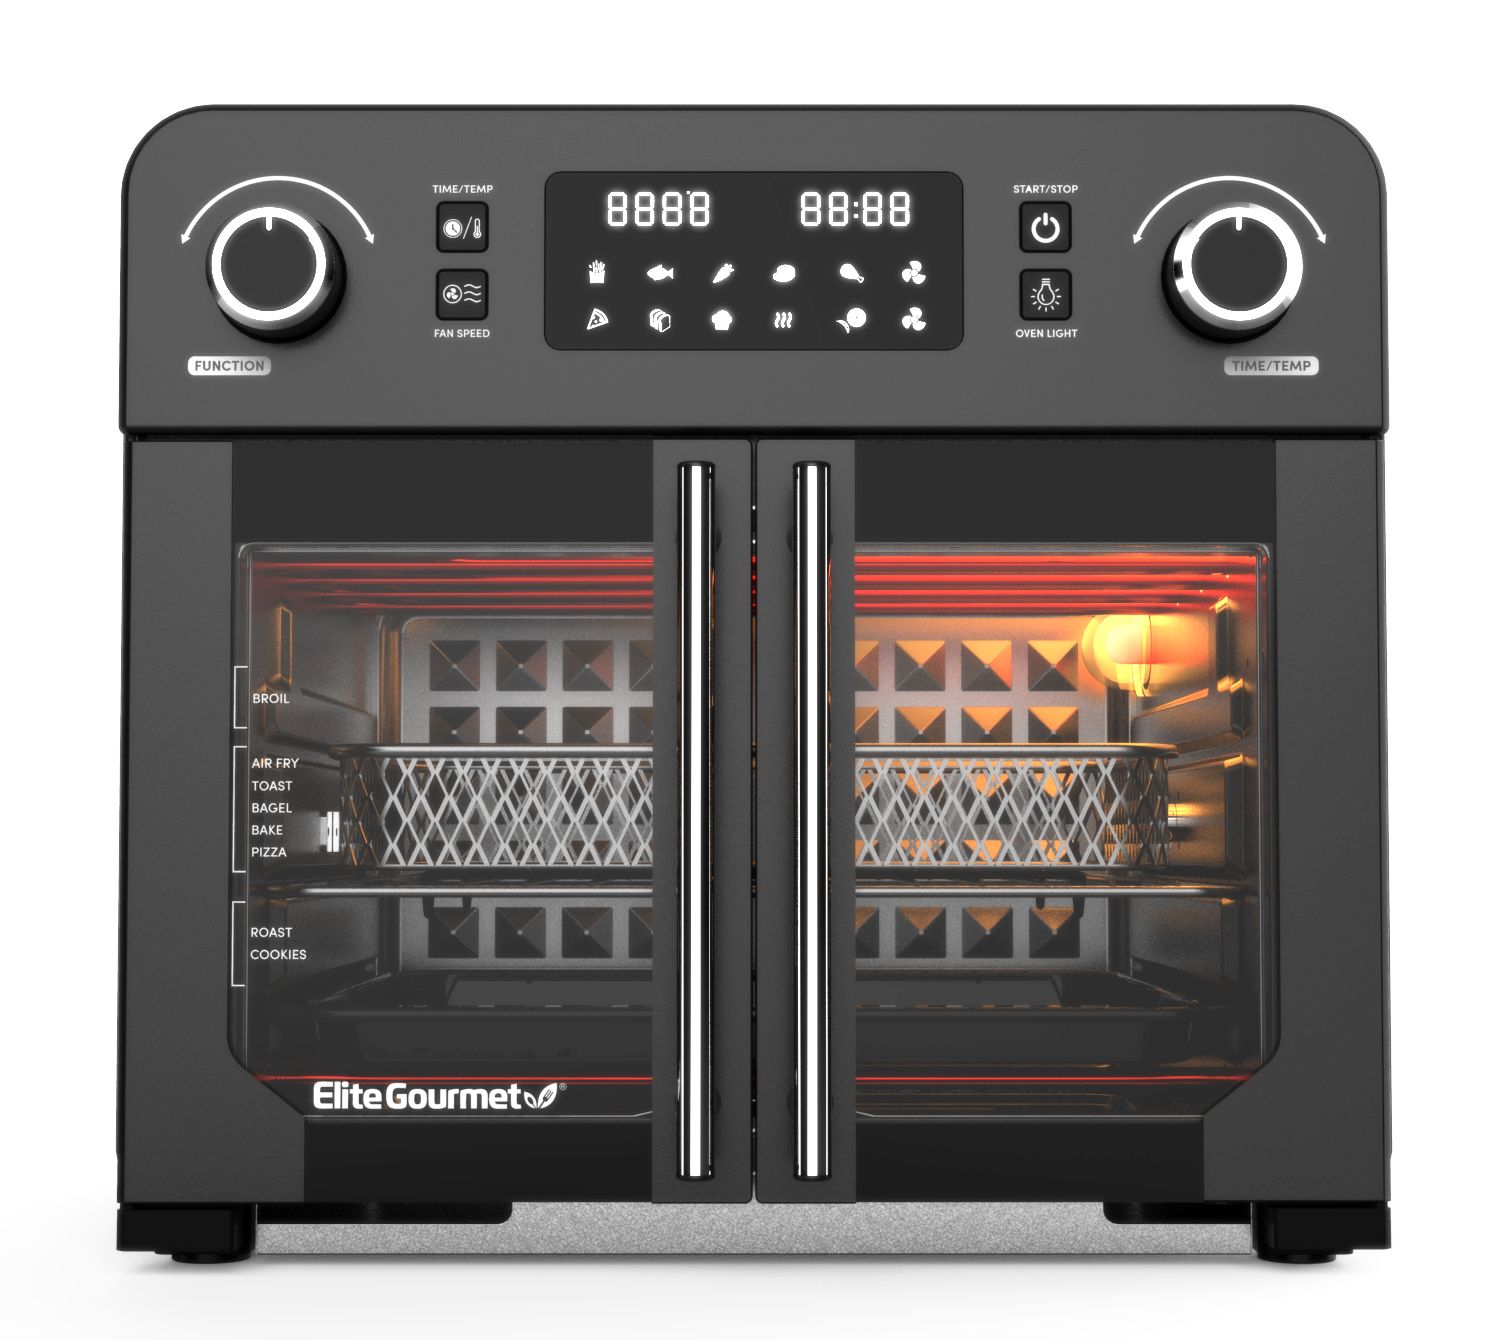 Elite Gourmet - 25L Air Fryer Oven - Black